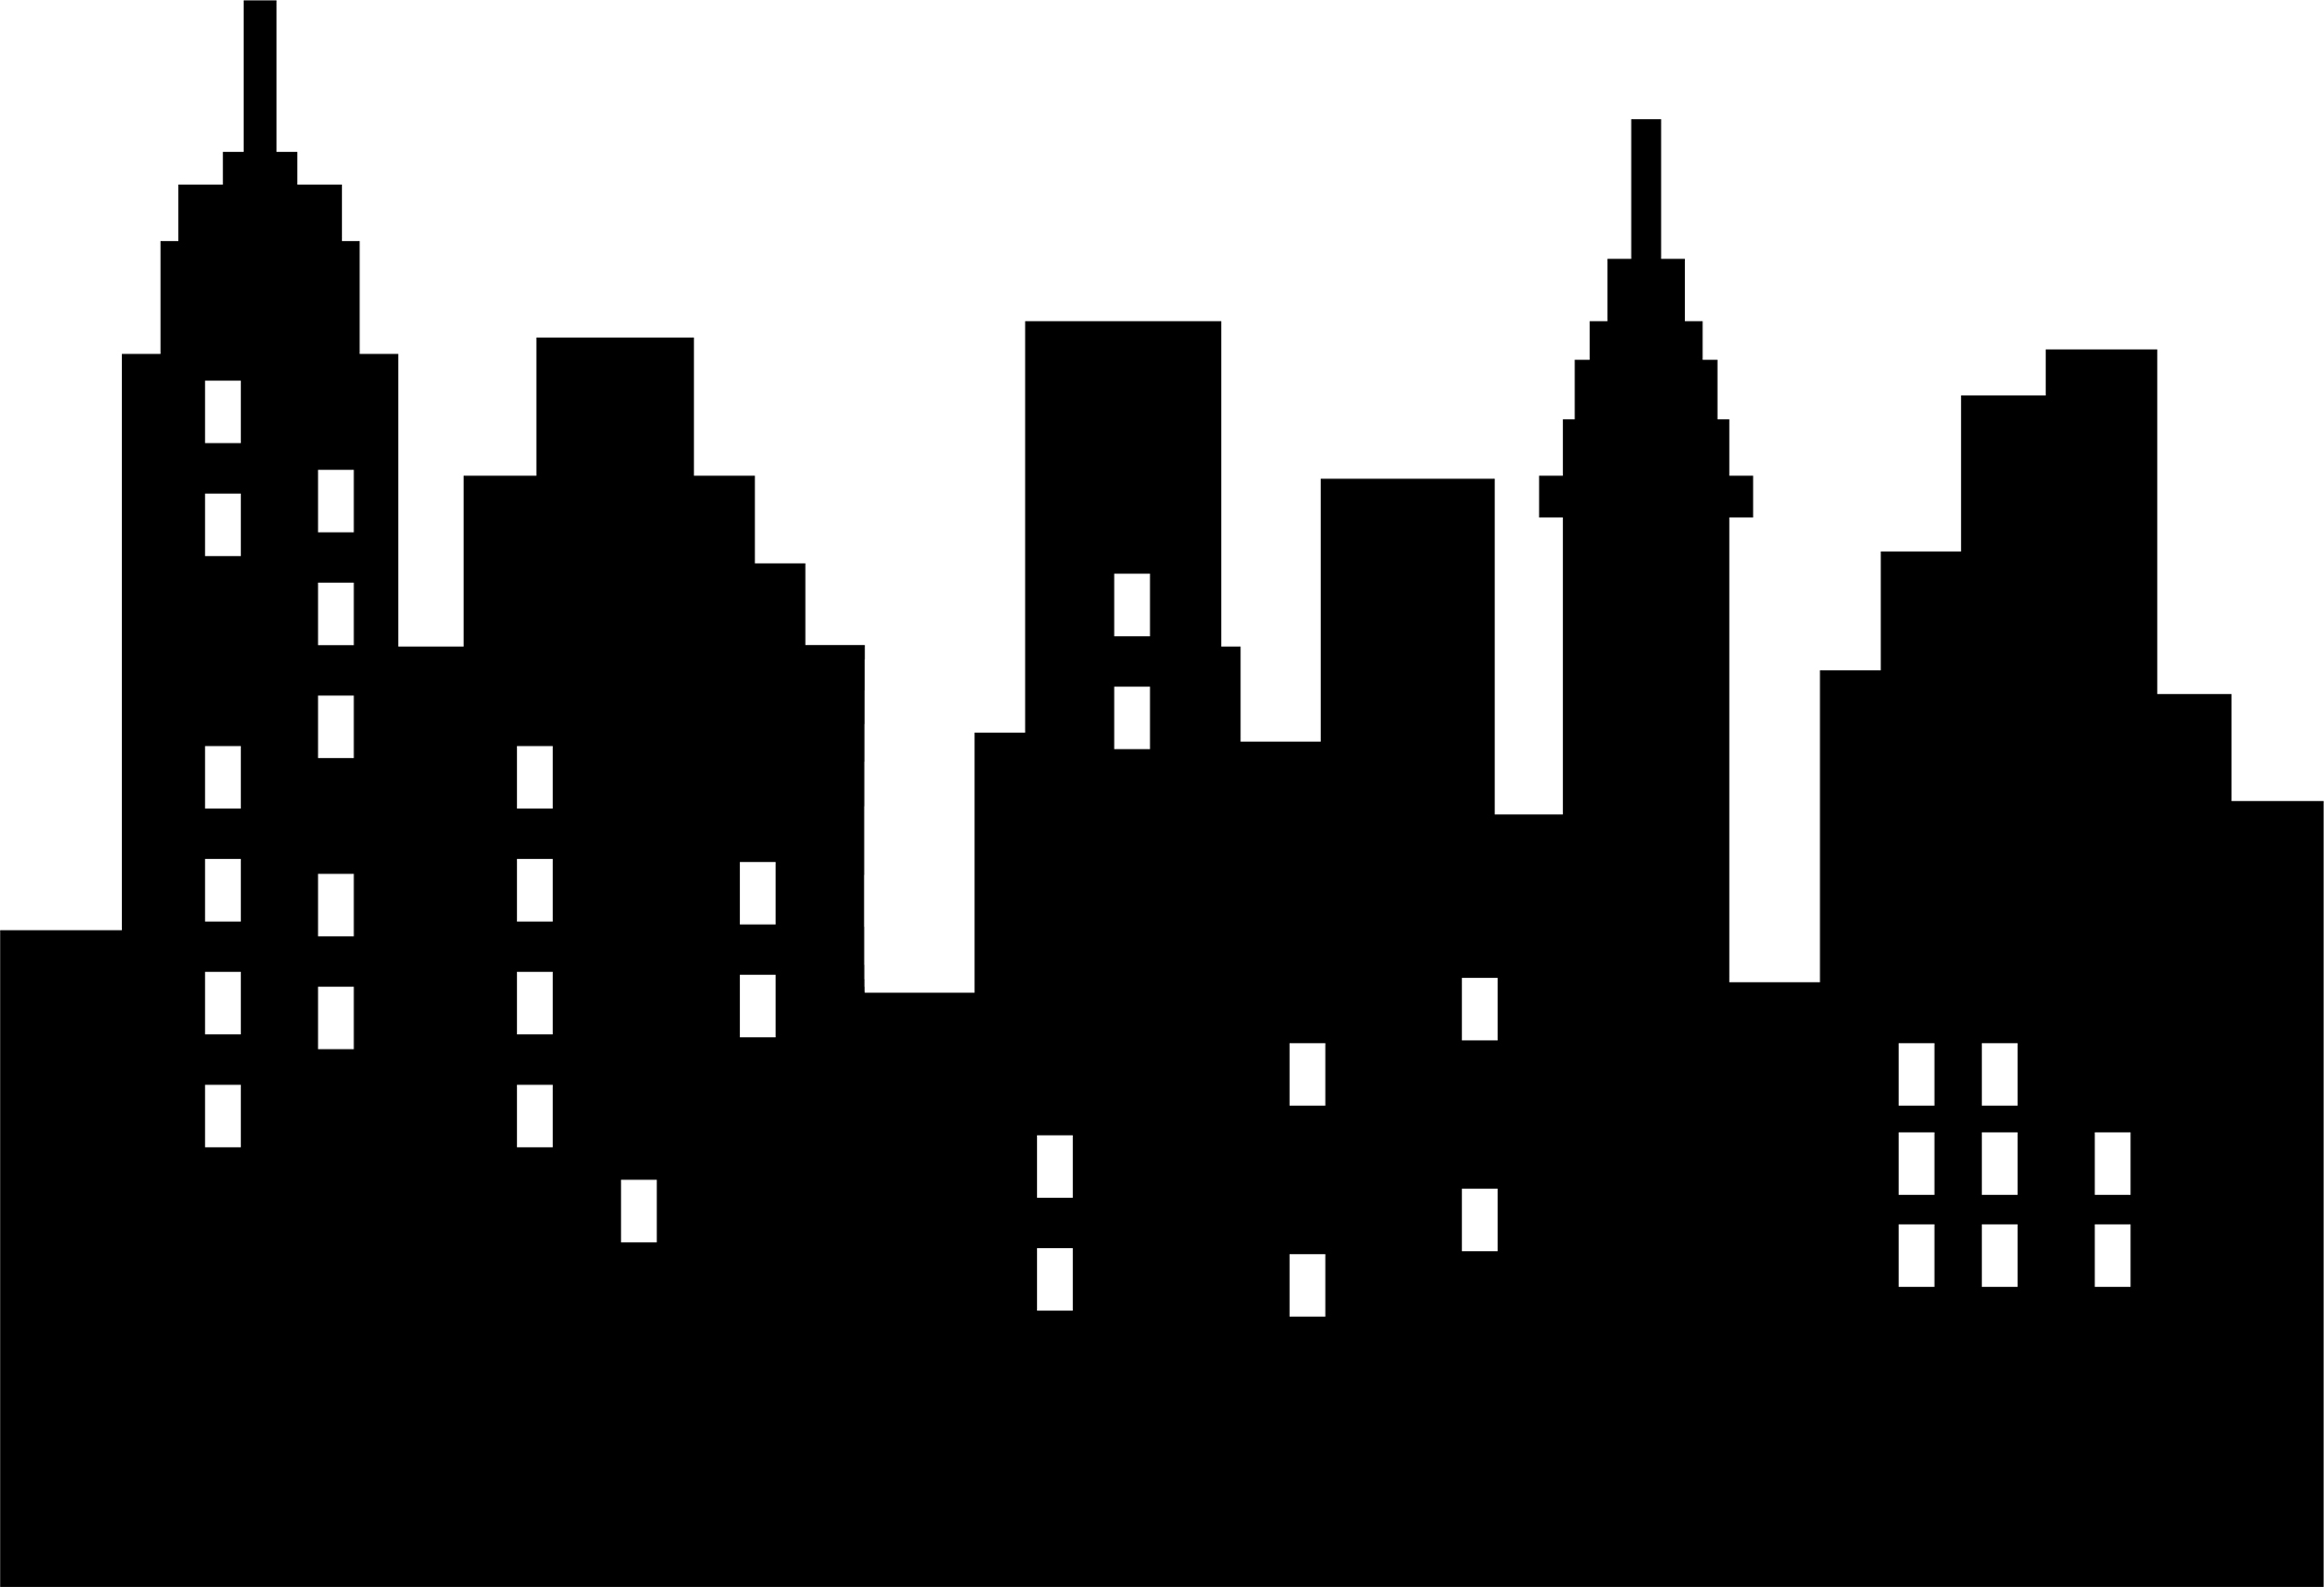 city skyline cartoon